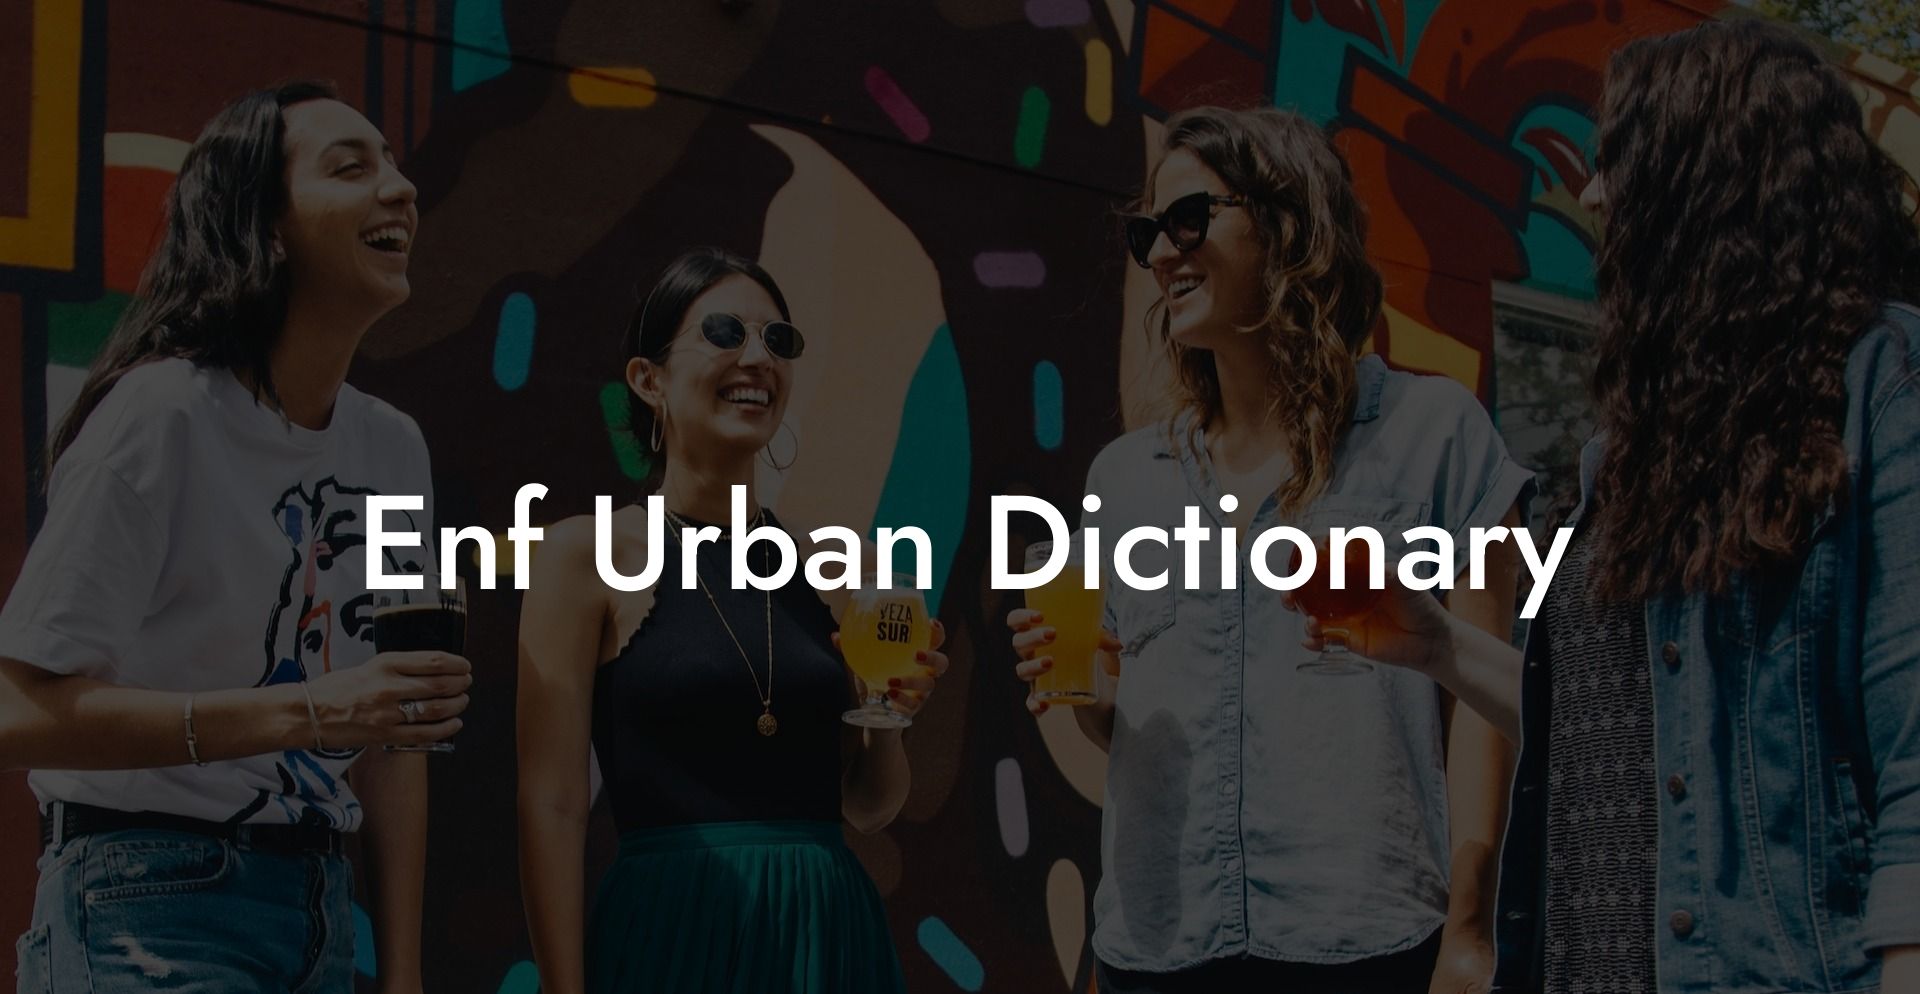 Enf Urban Dictionary